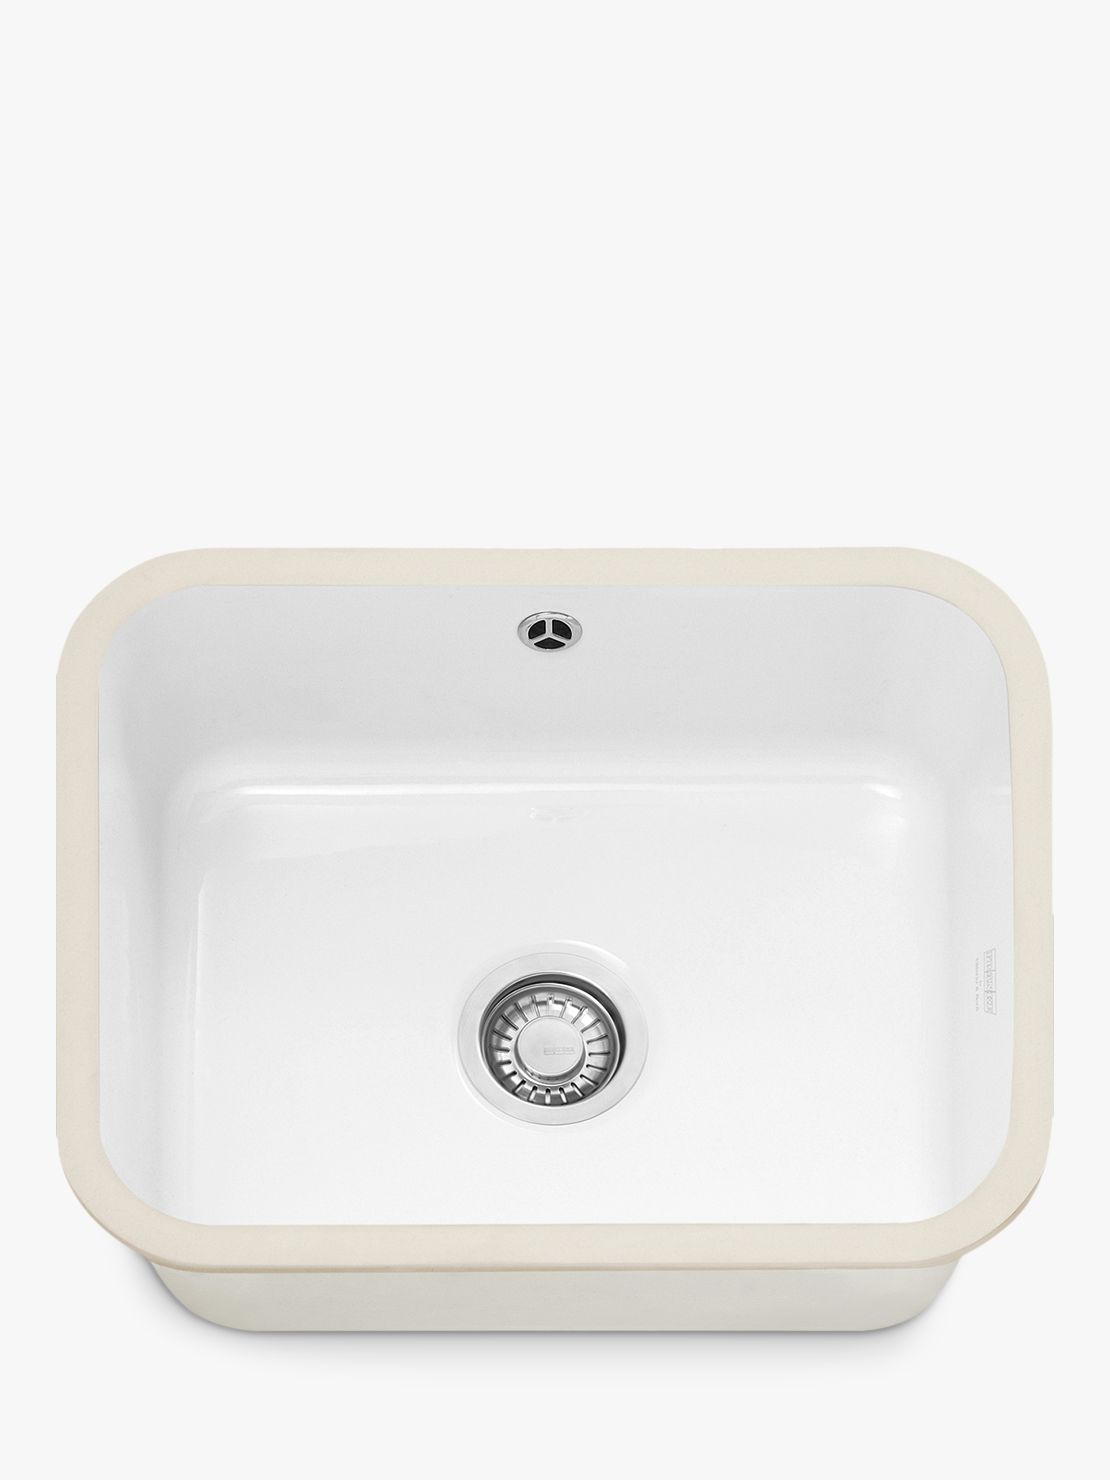 Franke Vbk 110 50 Single Bowl Undermounted Ceramic Kitchen Sink White